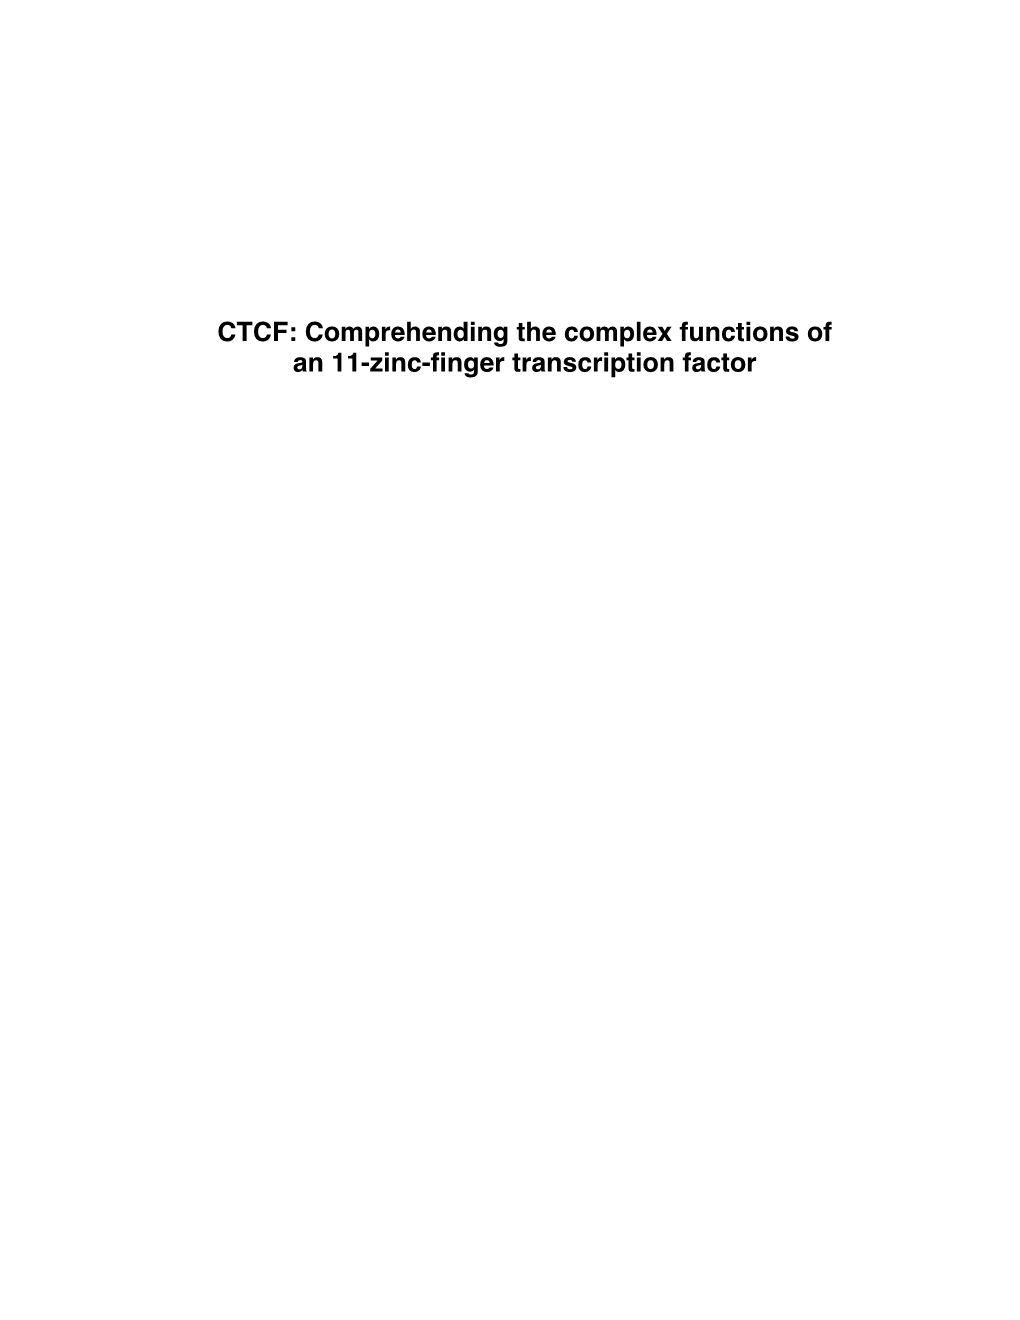 CTCF: Comprehending the Complex Functions of an 11-Zinc-Finger Transcription Factor